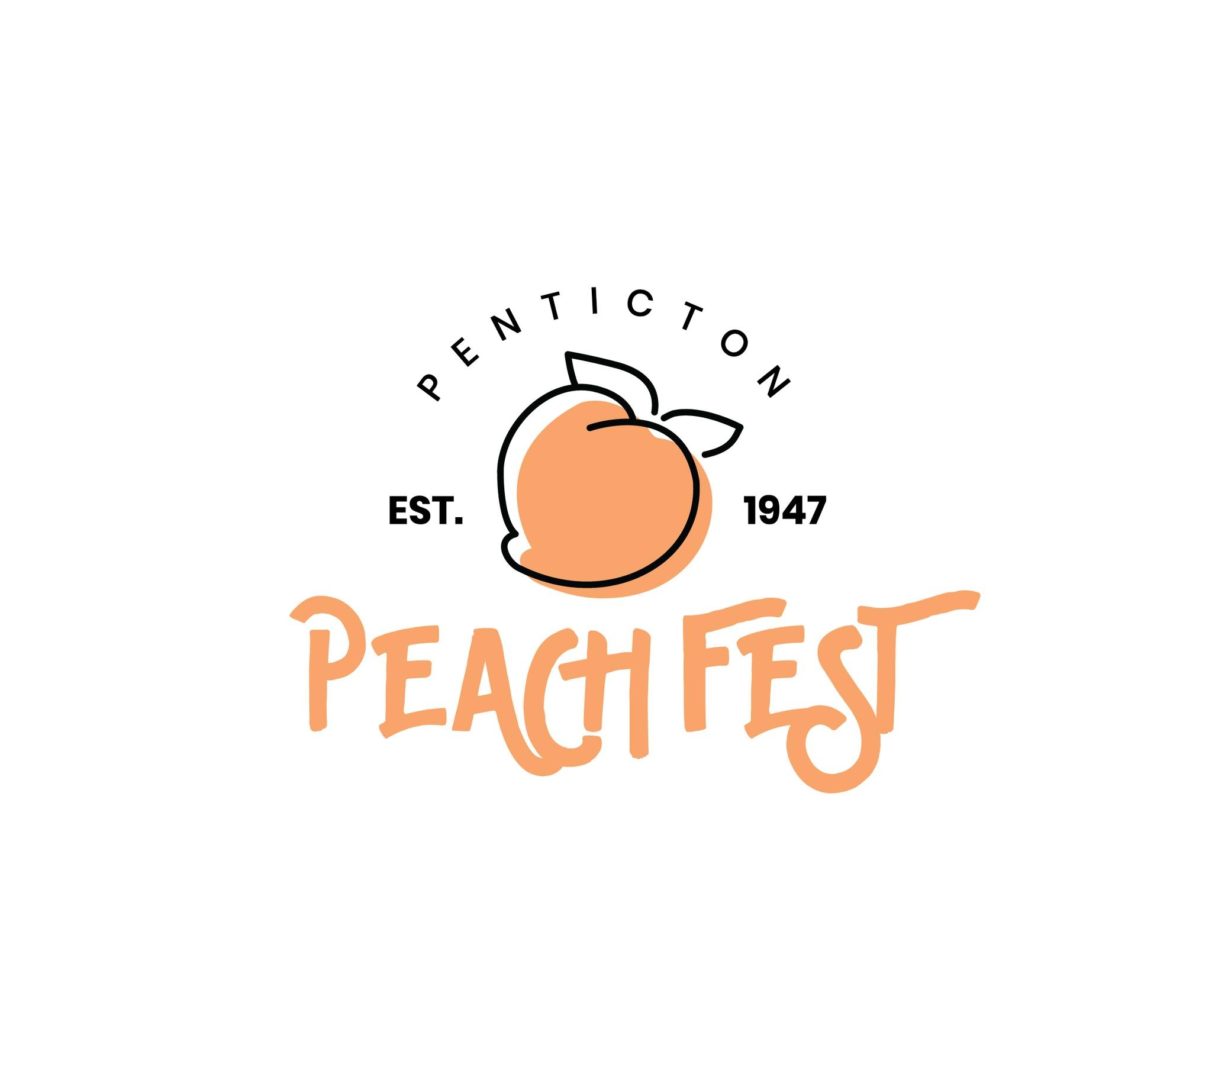 Penticton Peach Festival